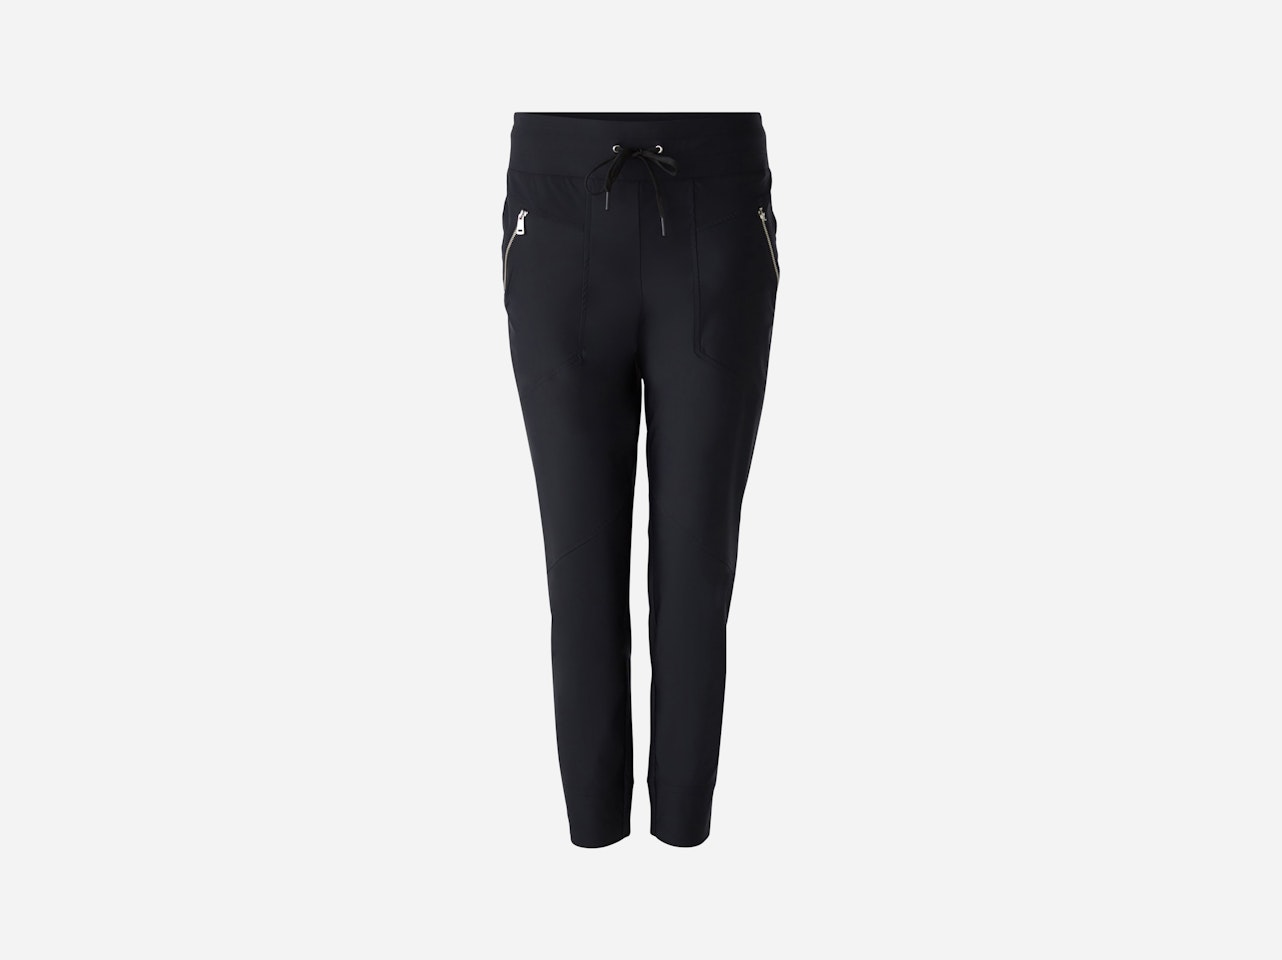 Bild 1 von Trousers with high elastane content in black | Oui